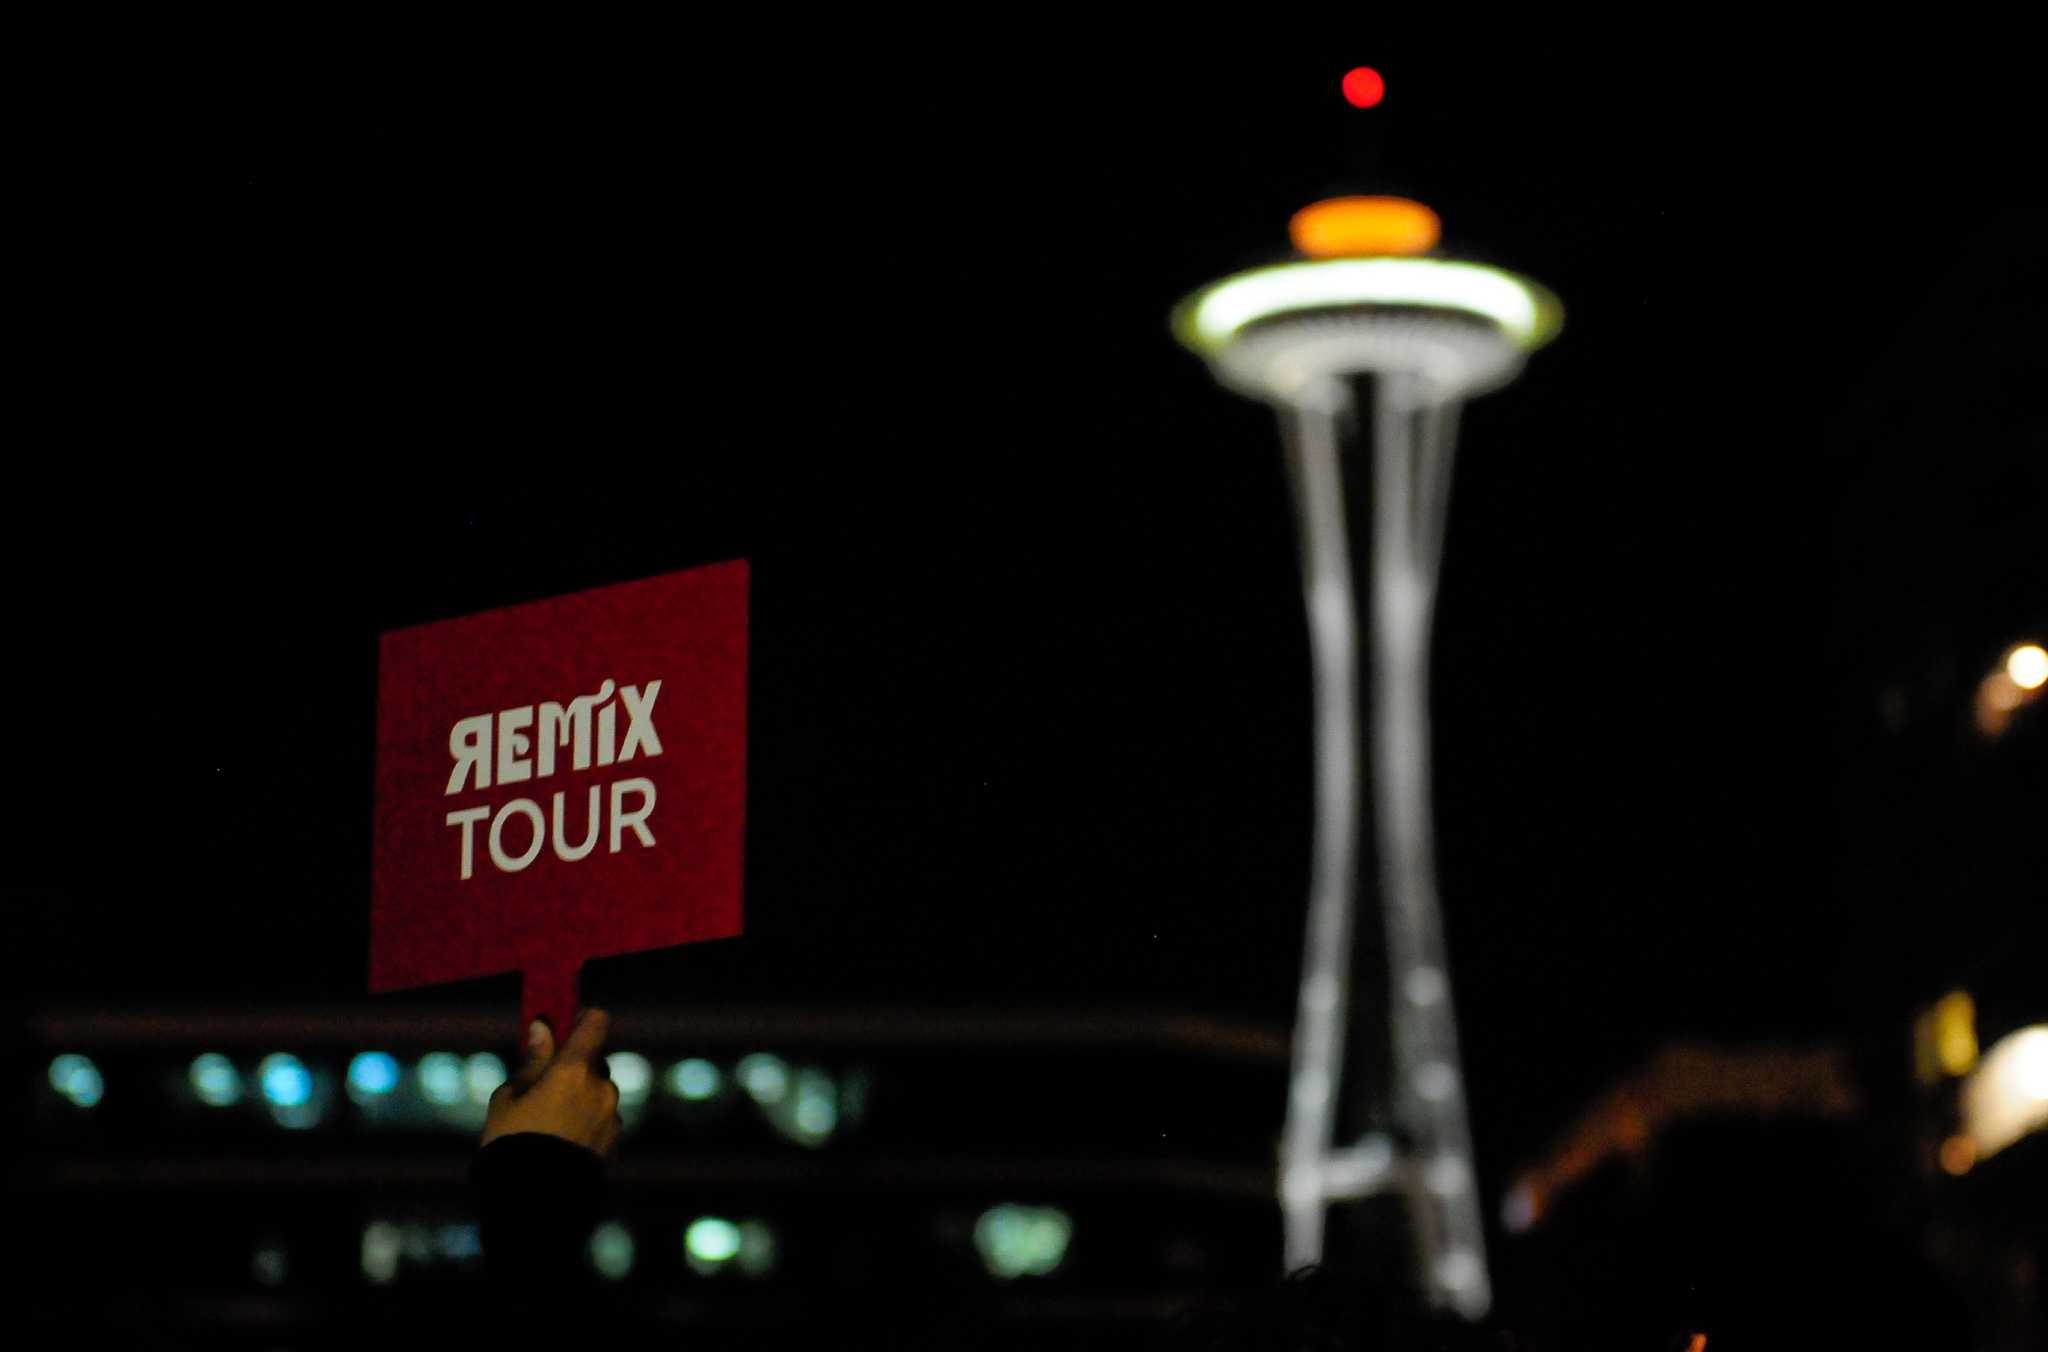 Seattle Art Museum 'Remix' event